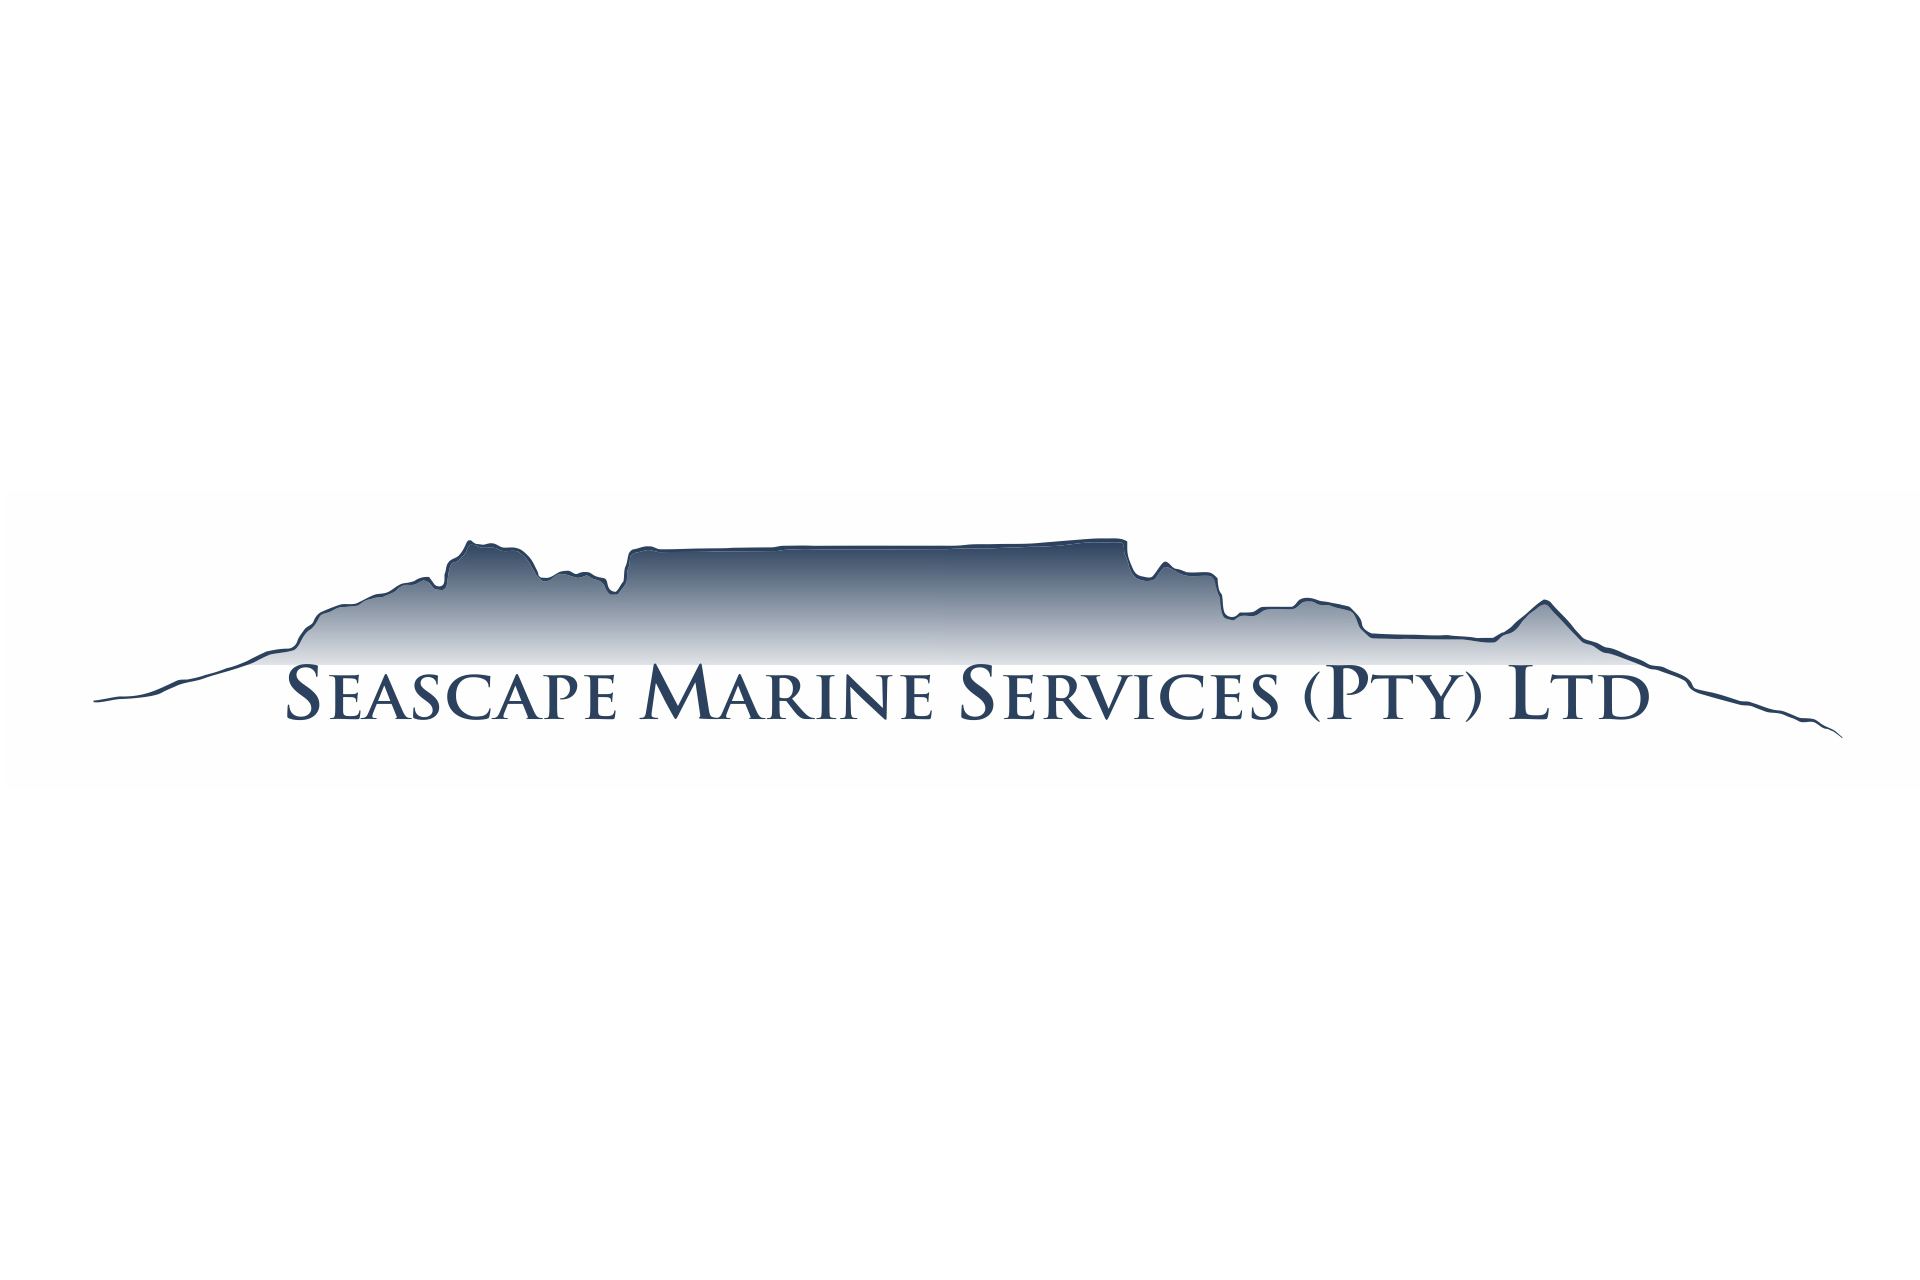 Seascape Marine Services logo 4x6